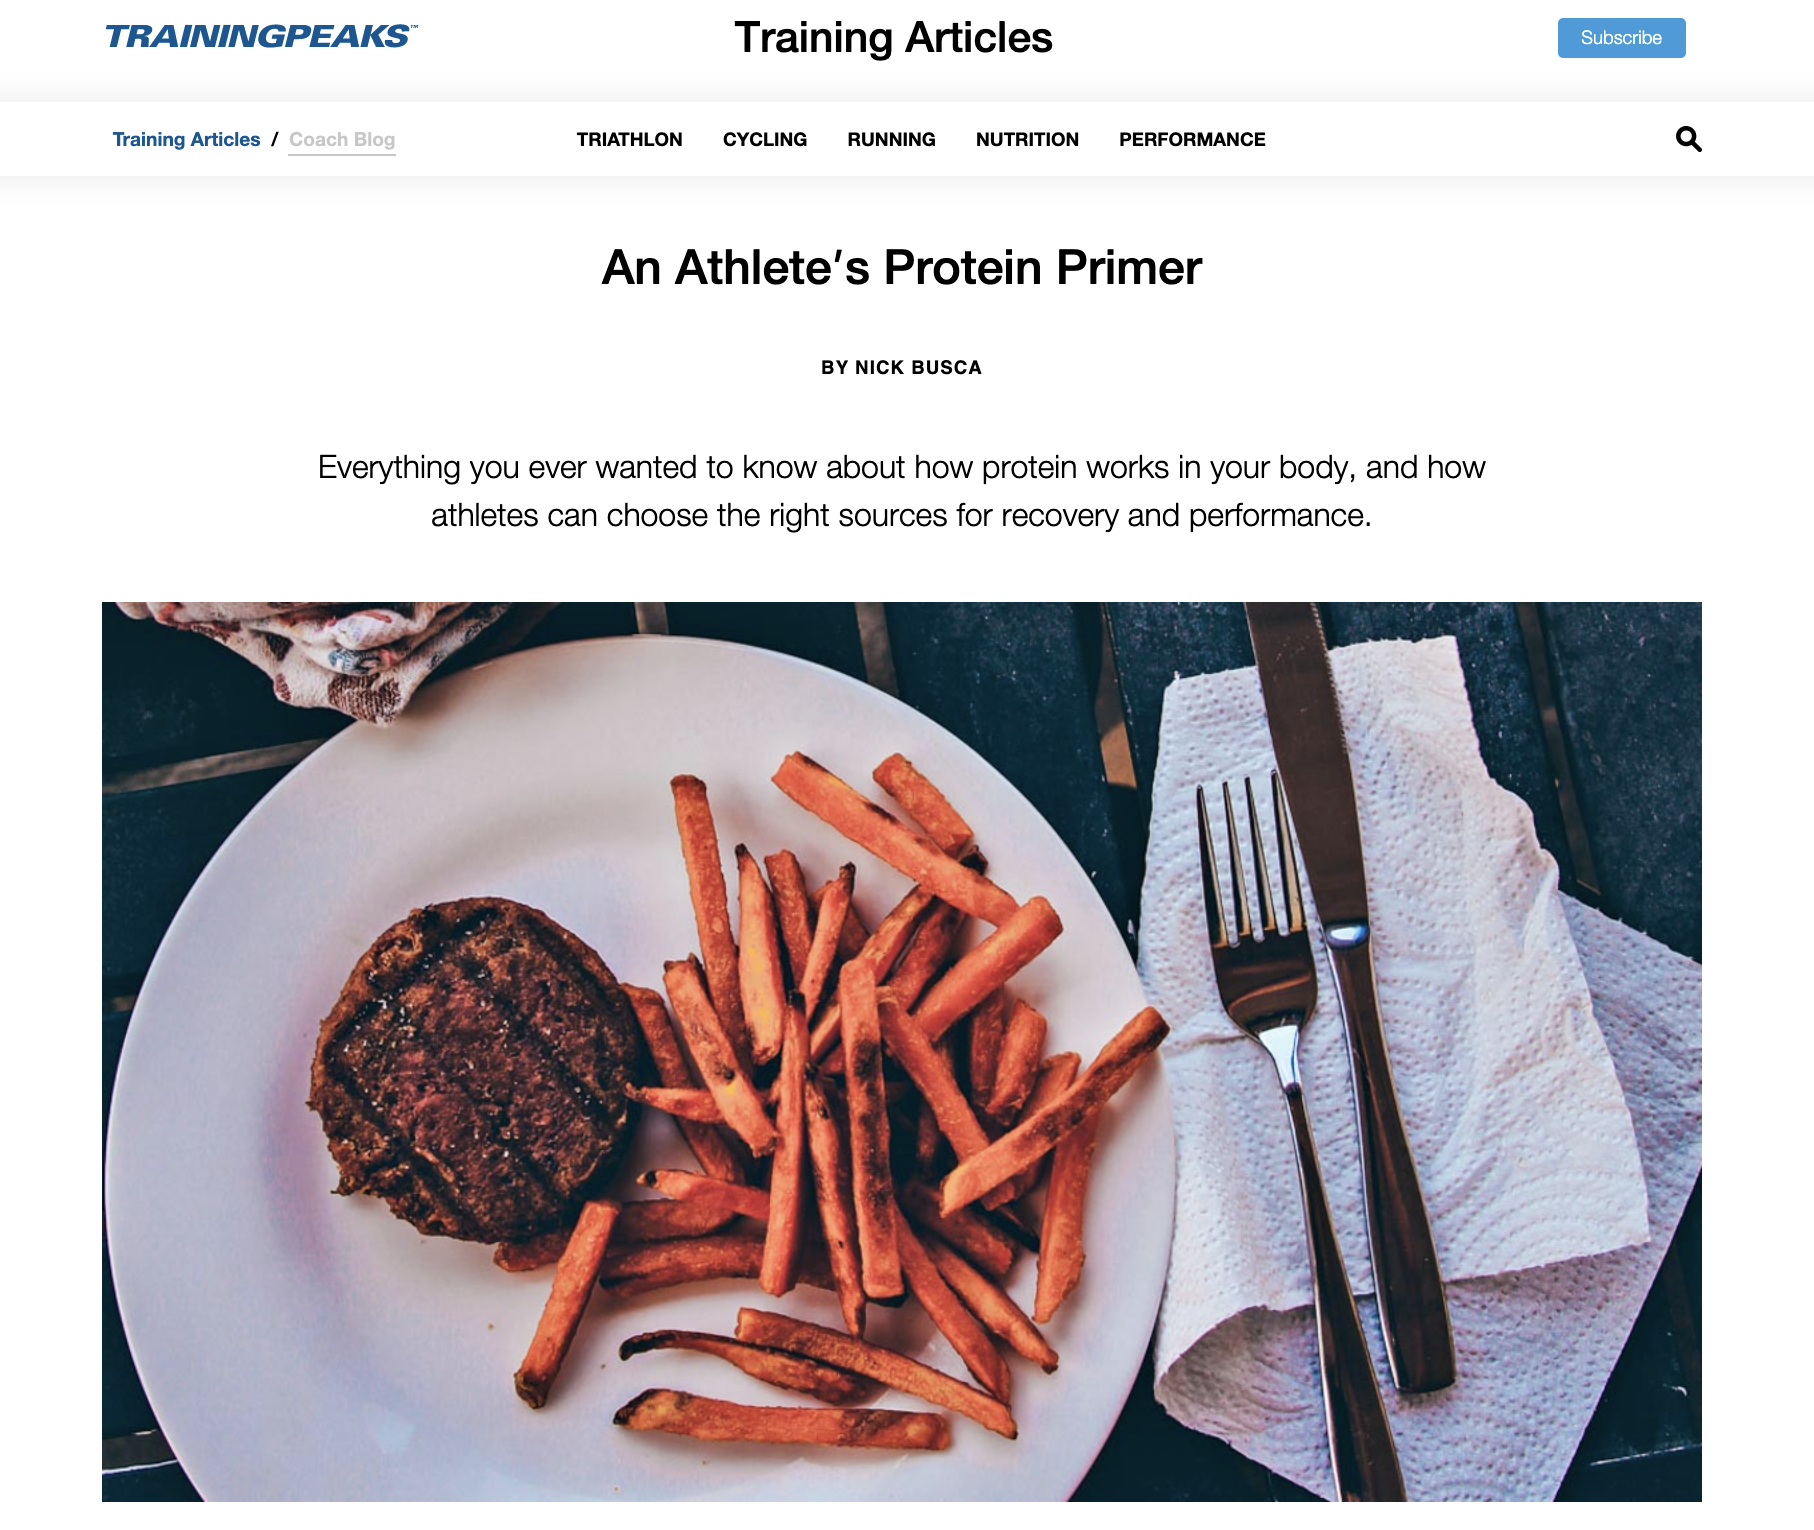 An Athlete’s Protein Primer